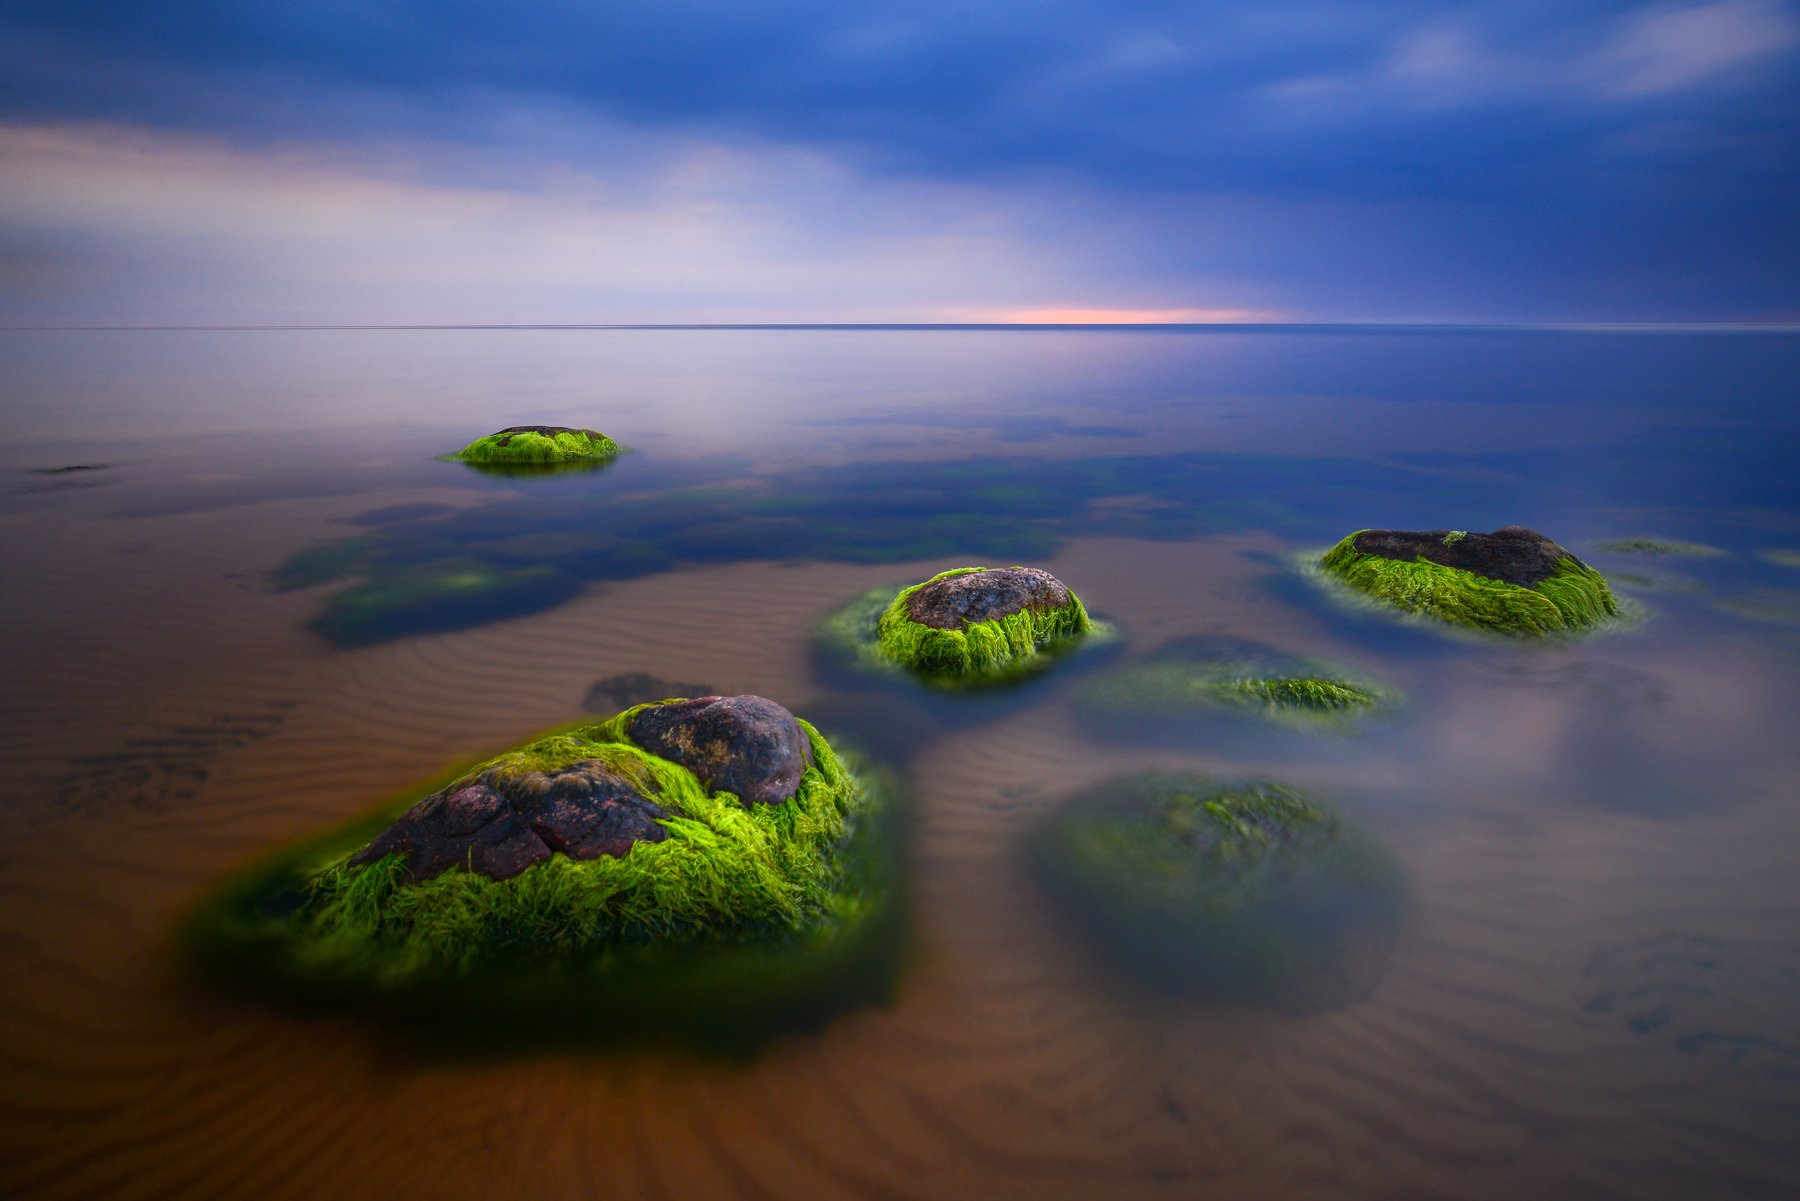 latvia#sea#baltic#green#summer#longexposure#landscape, Olegs Bucis